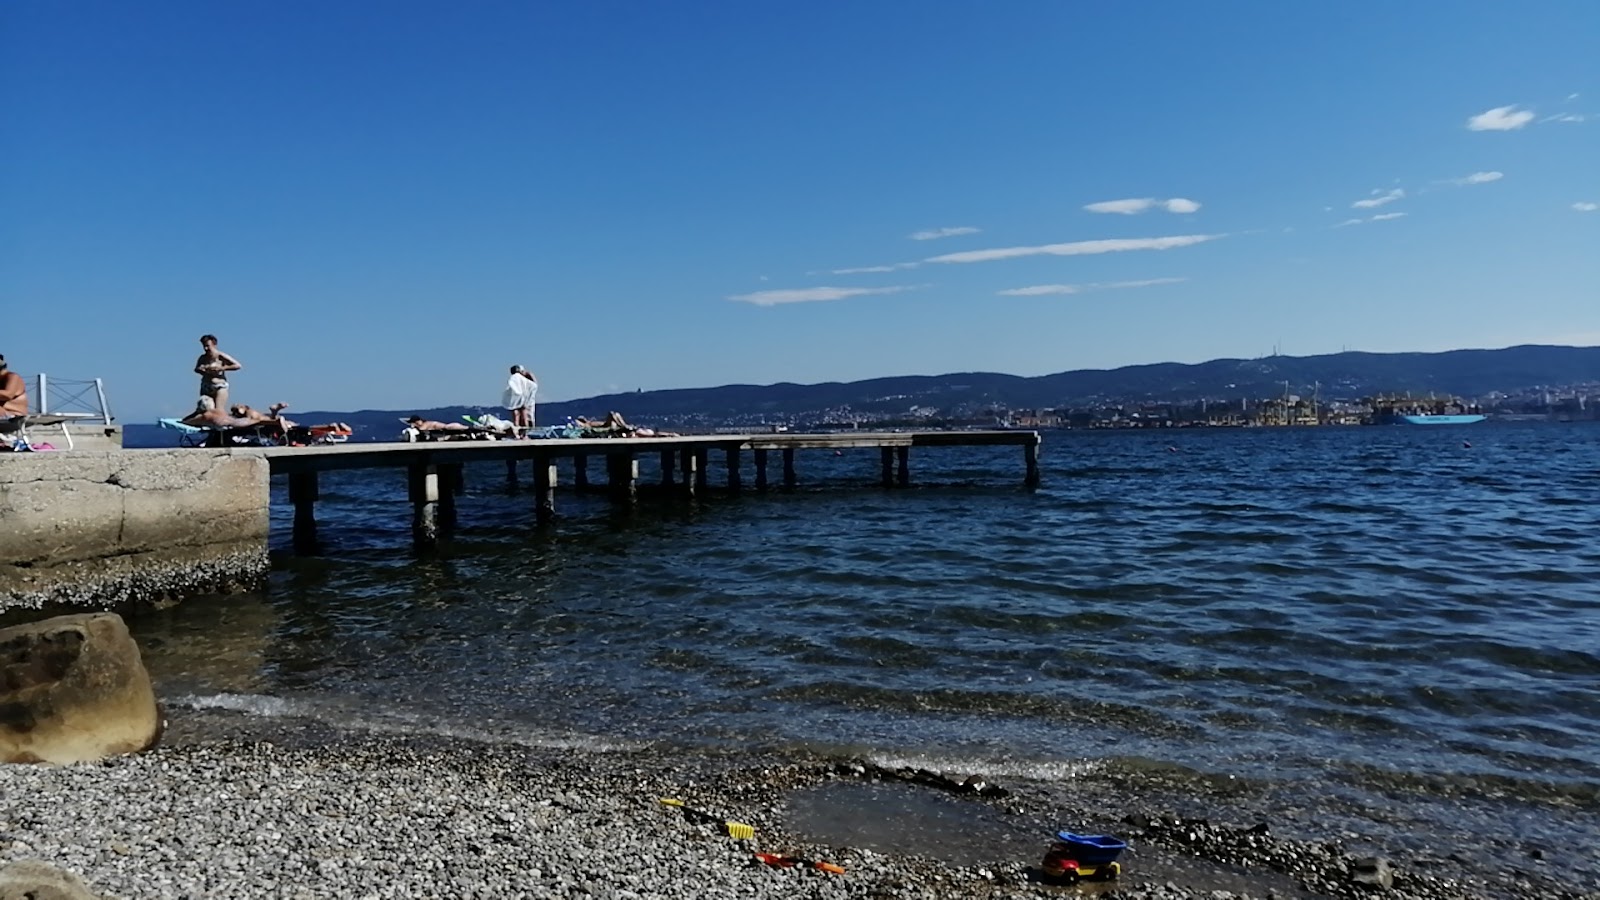 Spiaggia Muggia'in fotoğrafı turkuaz saf su yüzey ile